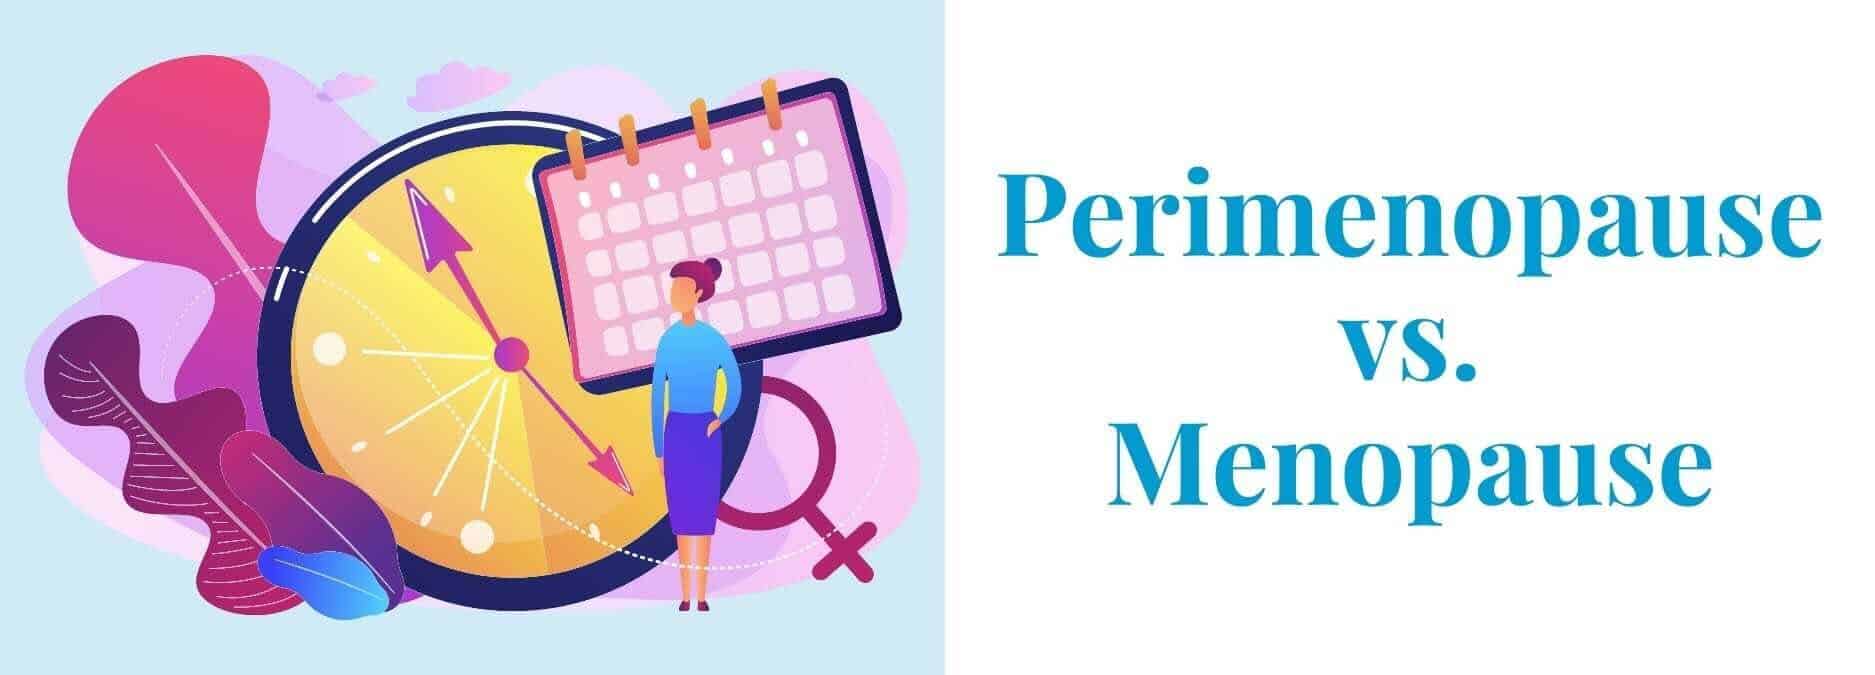 balance - Vaginal bleeding during perimenopause and menopause